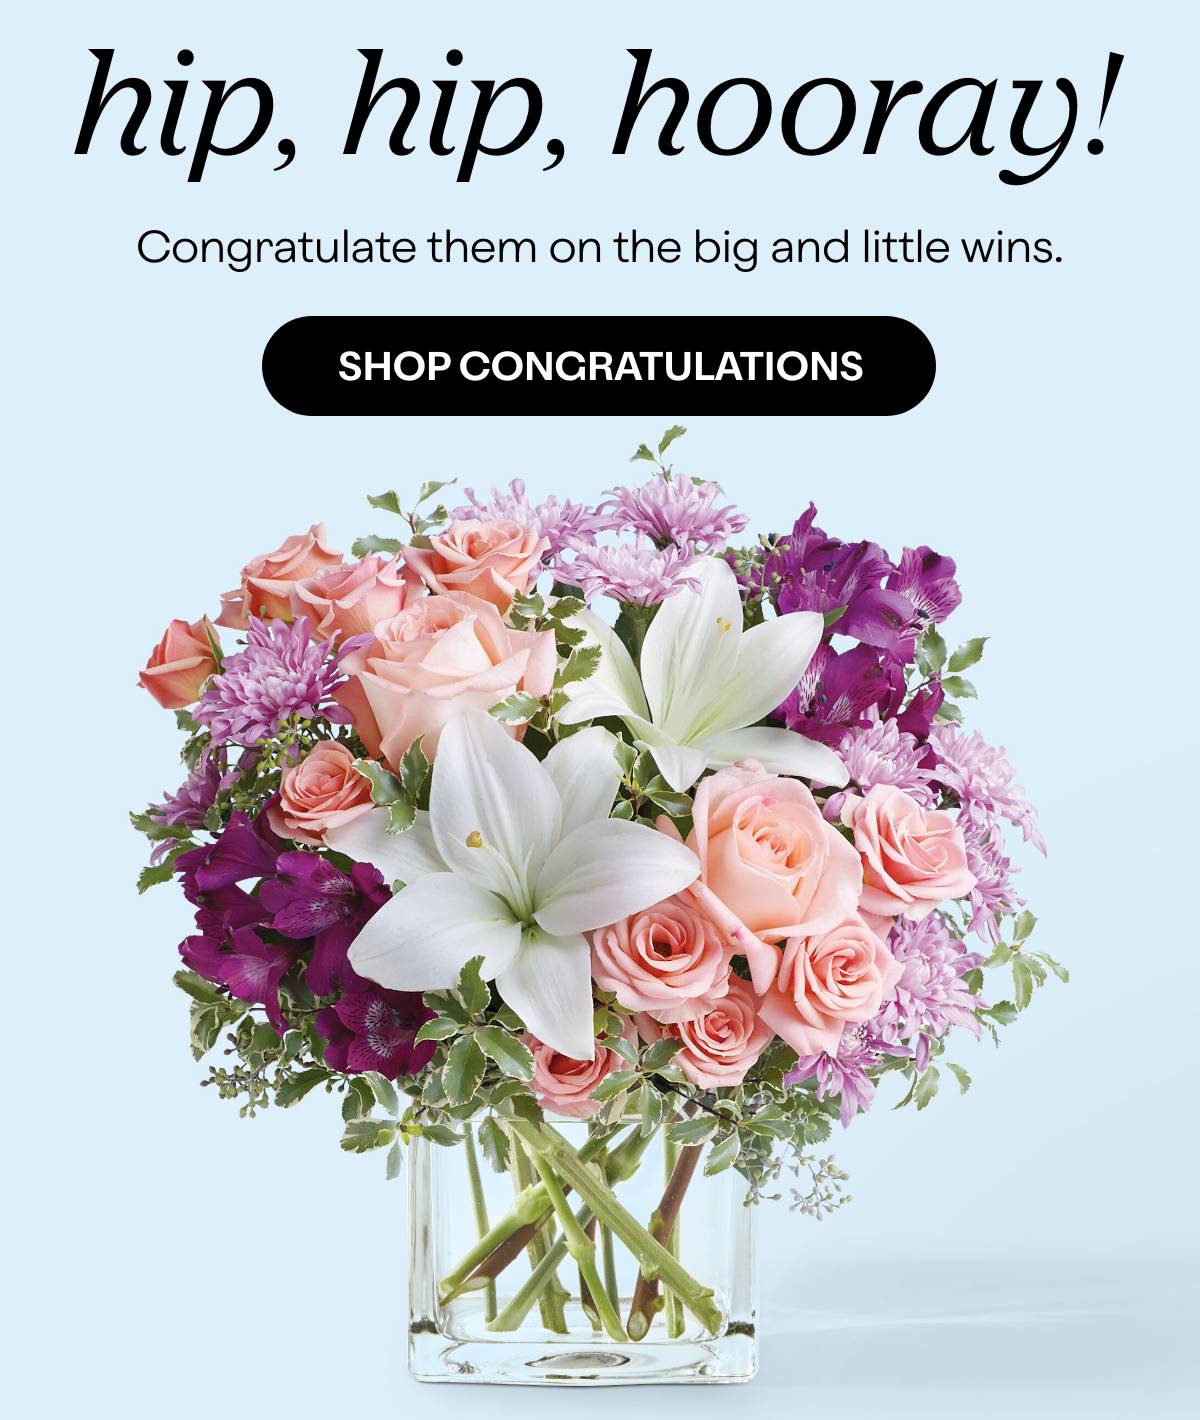 hip, hip, hooray! - Congratulate them on the big and little wins. - SHOP CONGRATULATIONS 